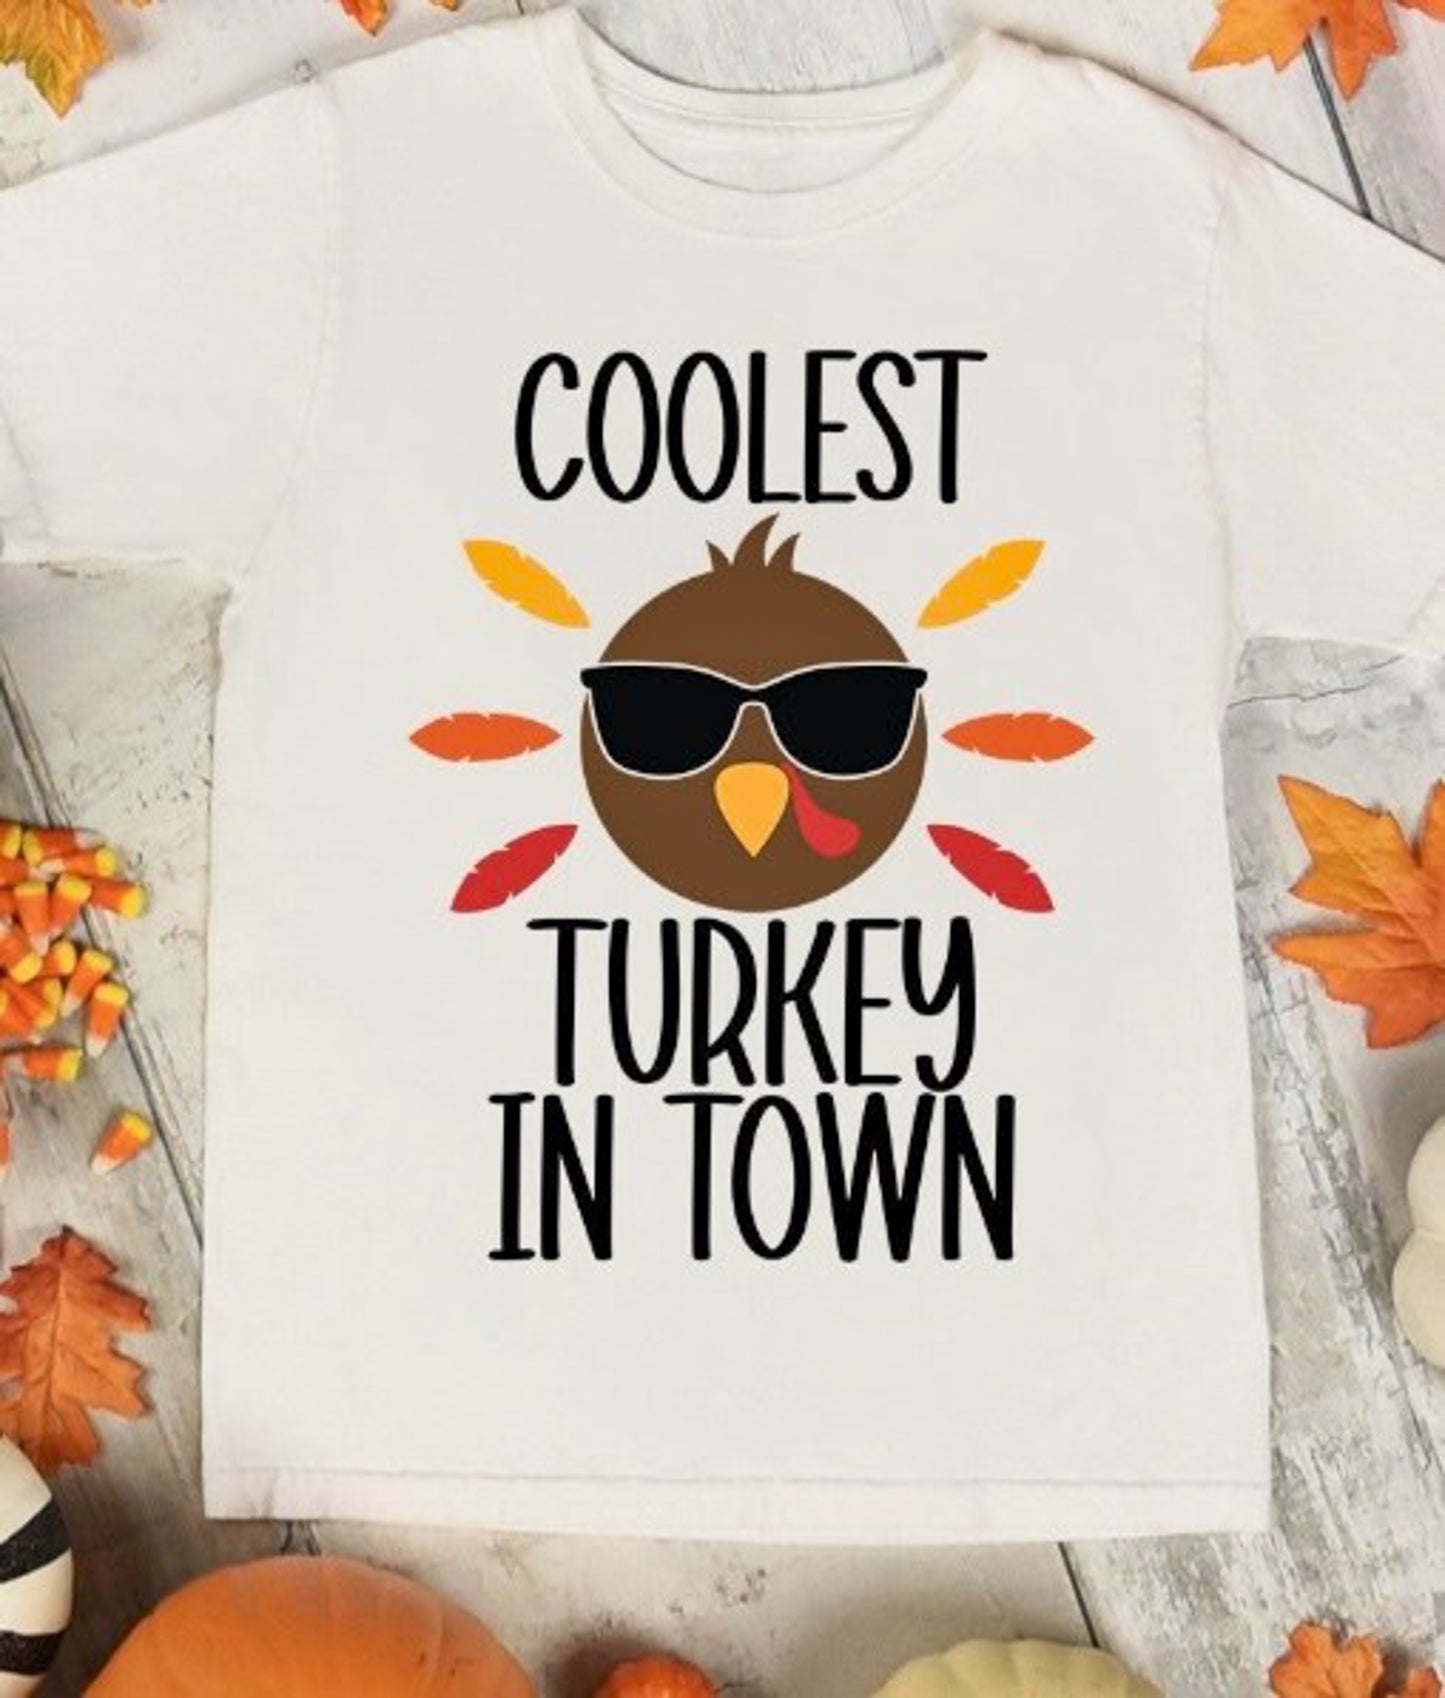 Coolest Turkey In Town Tee